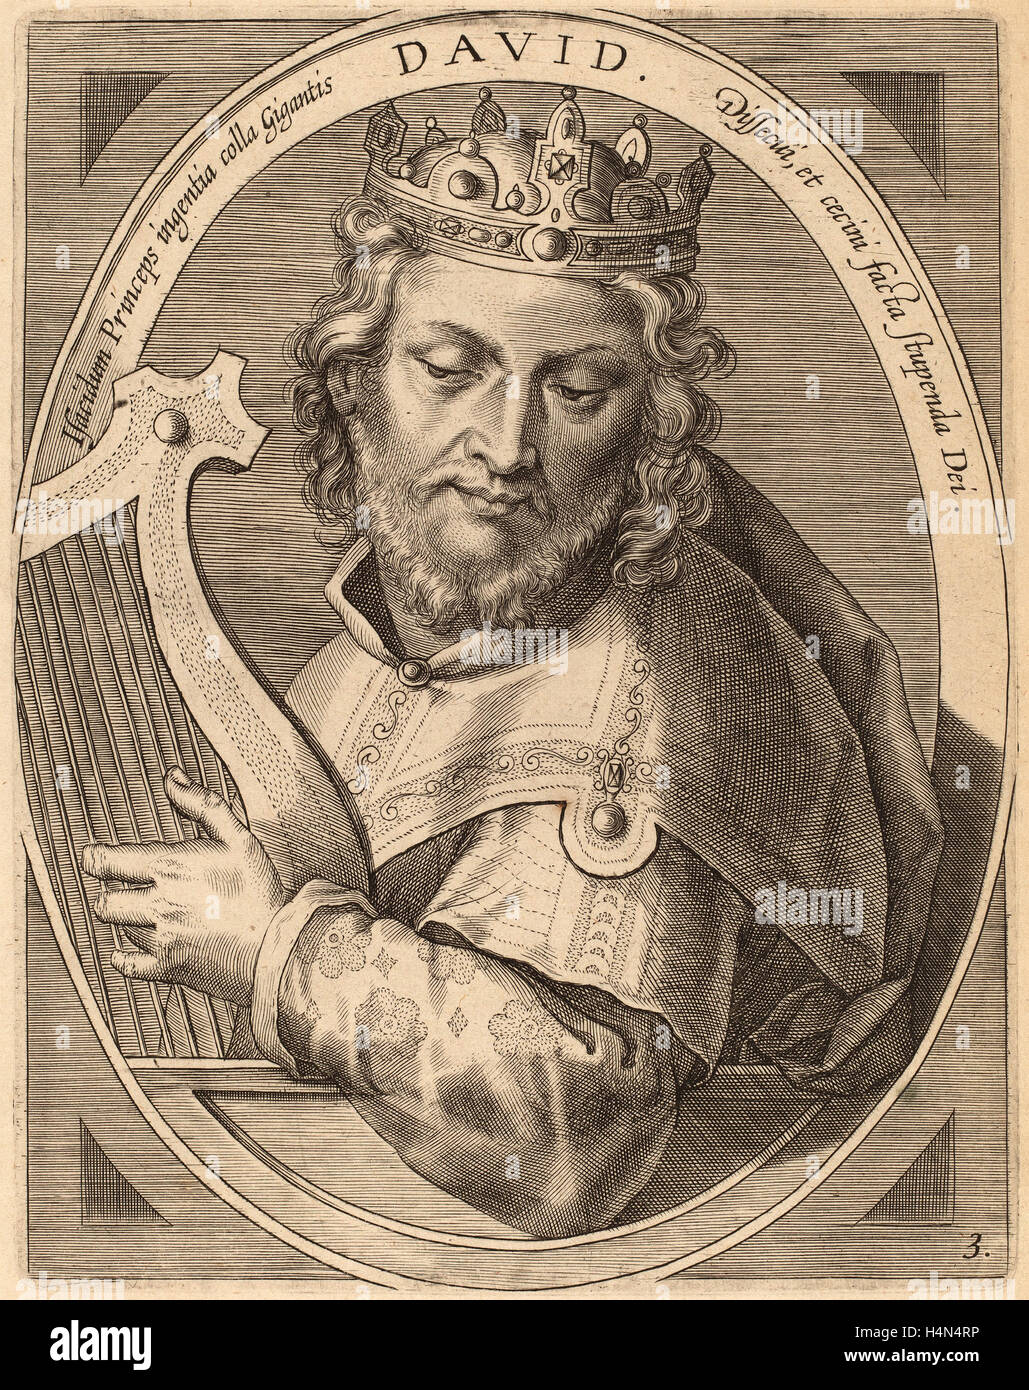 Theodor Galle after Jan van der Straet (Flemish, c. 1571 - 1633), David, published 1613, engraving on laid paper Stock Photo